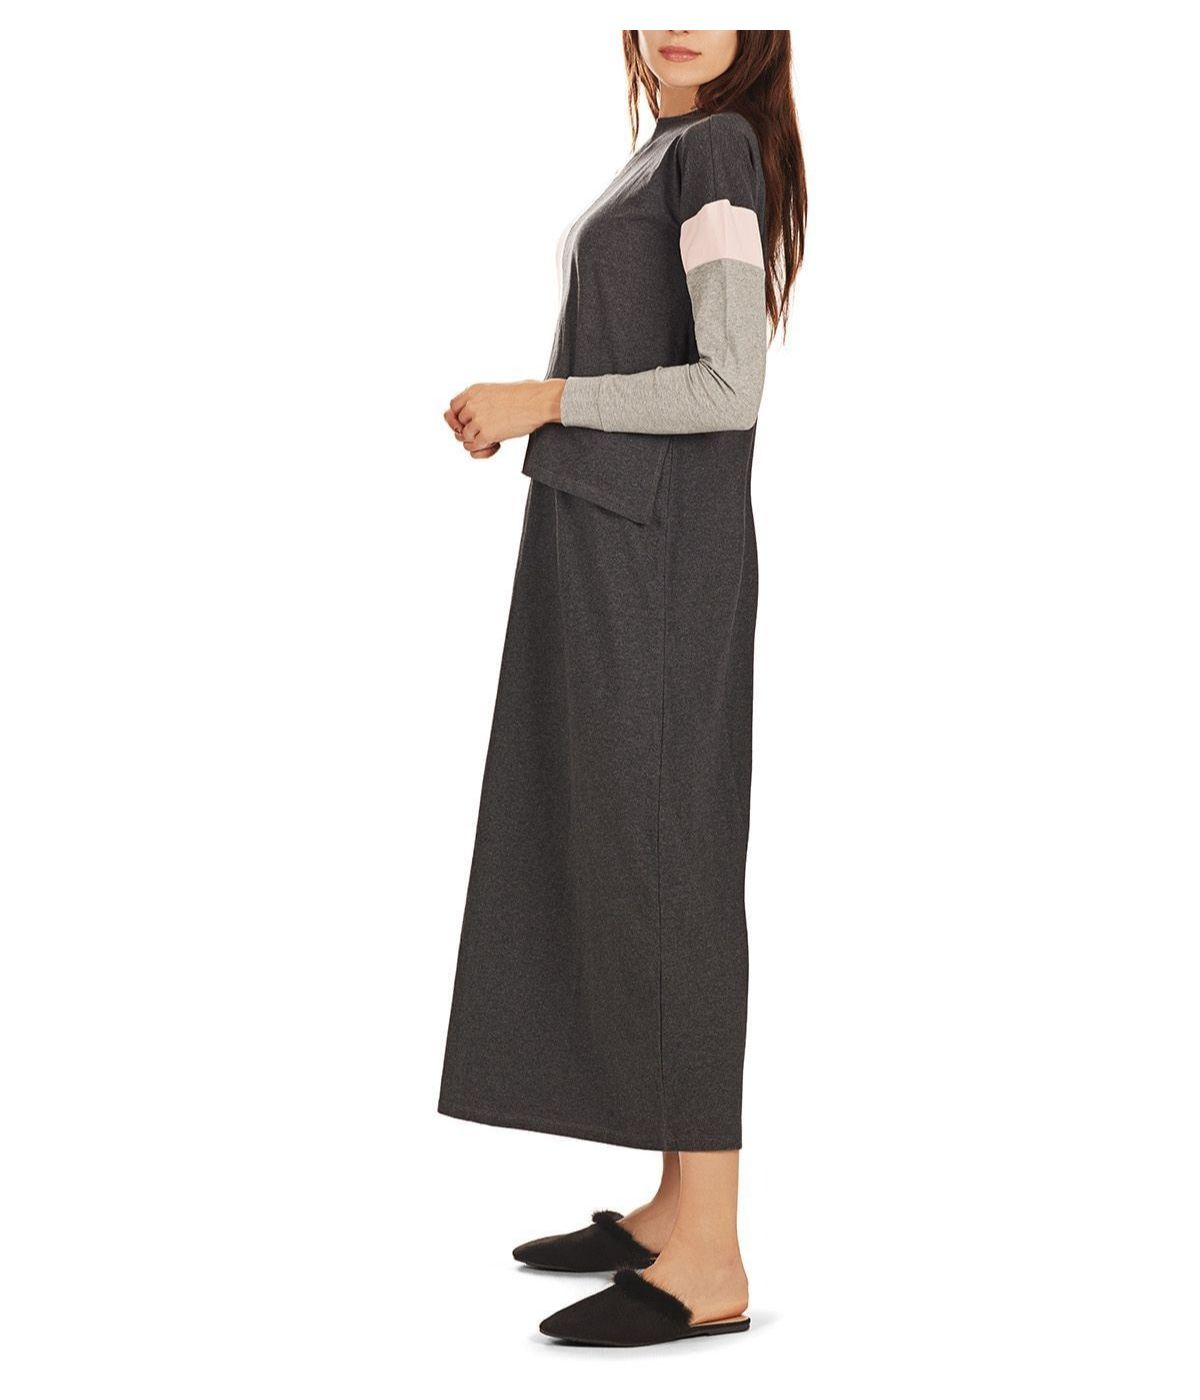 Women's Ultra Soft Cotton Blend Modest Nursing Gown Charcoal Heather